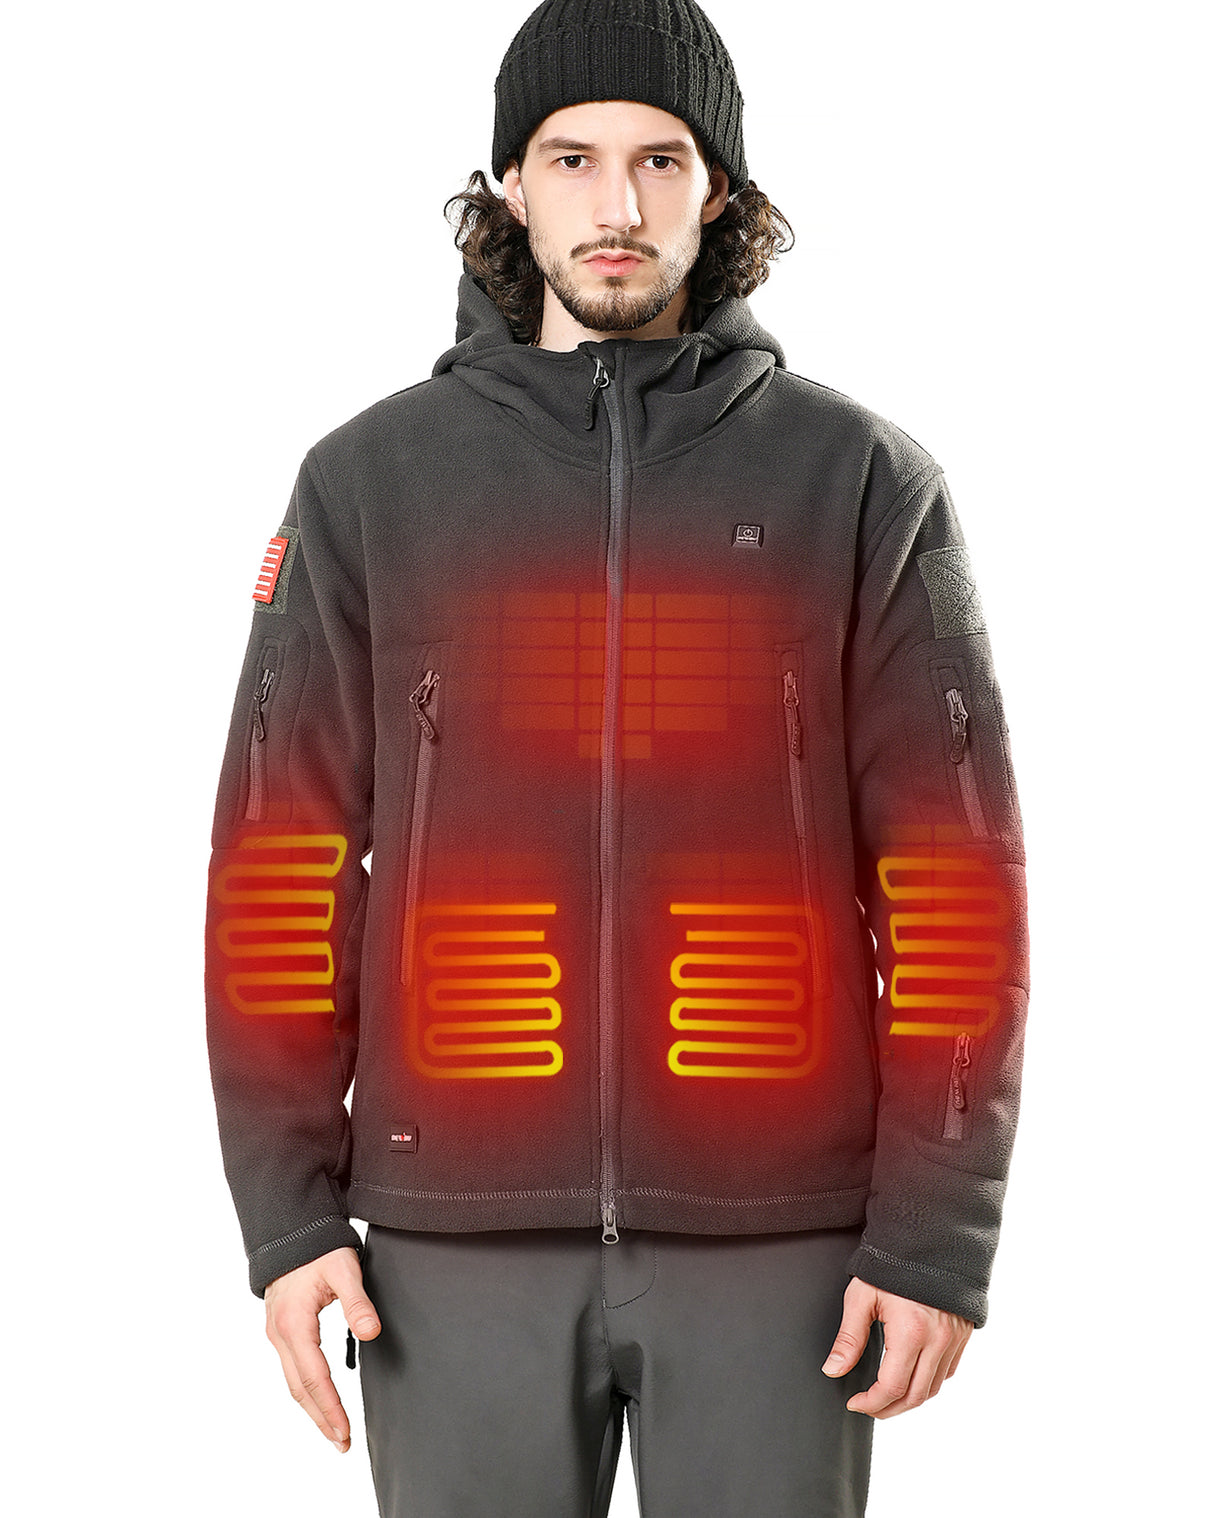 Men's Polar Fleece Heated Jacket With 12V Battery Pack - Grey